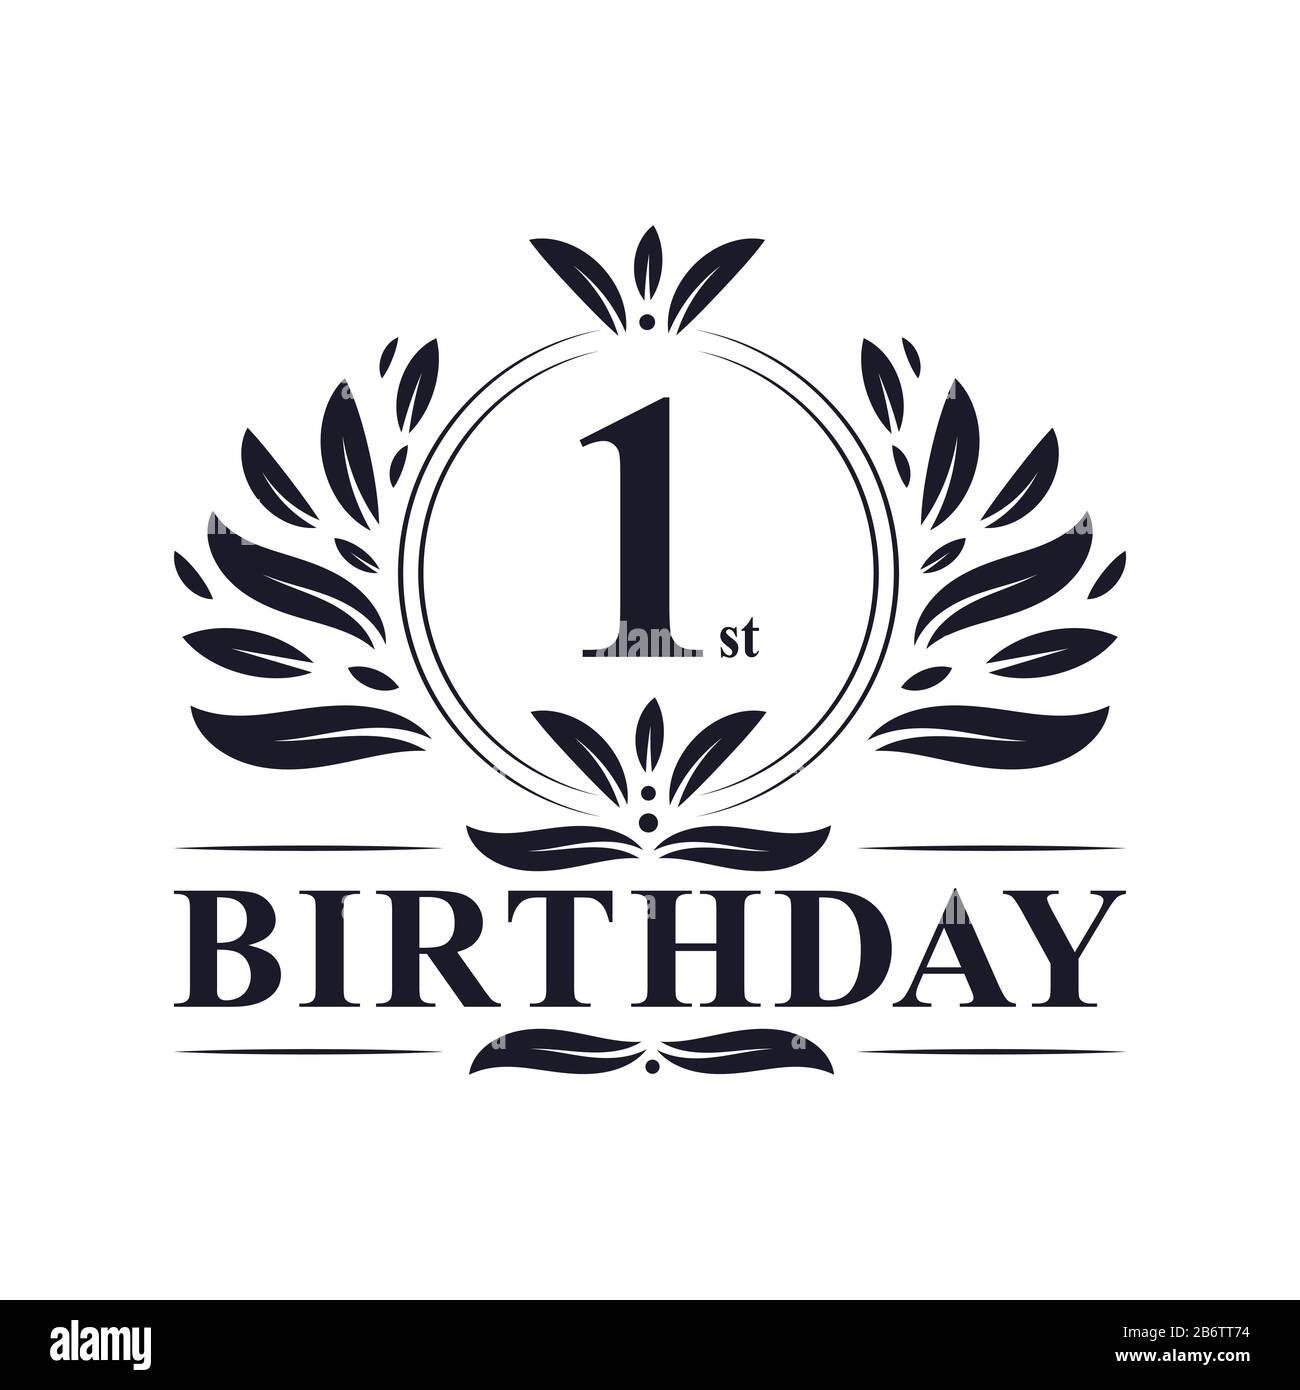 https://c8.alamy.com/compfr/2b6tt74/1-ans-de-logo-anniversaire-de-luxe-1-anniversaire-design-celebration-2b6tt74.jpg